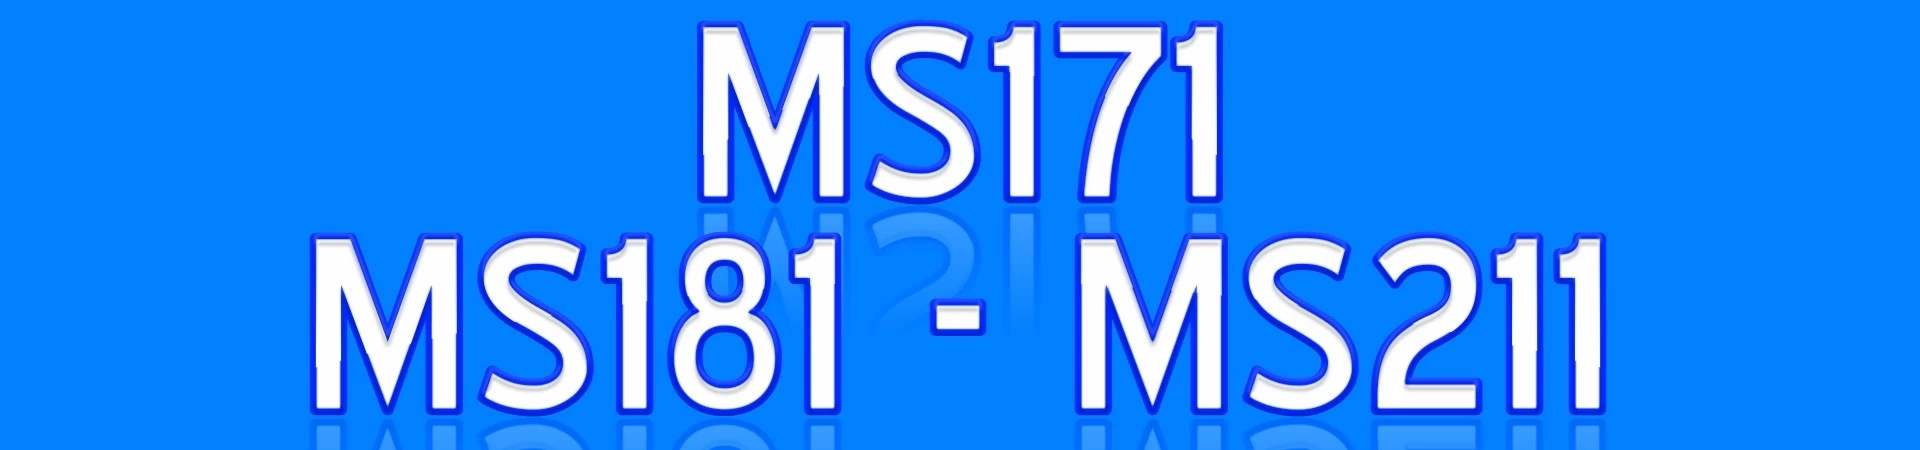 REPUESTOS para Motosierra STIHL MS171 MS181 MS211